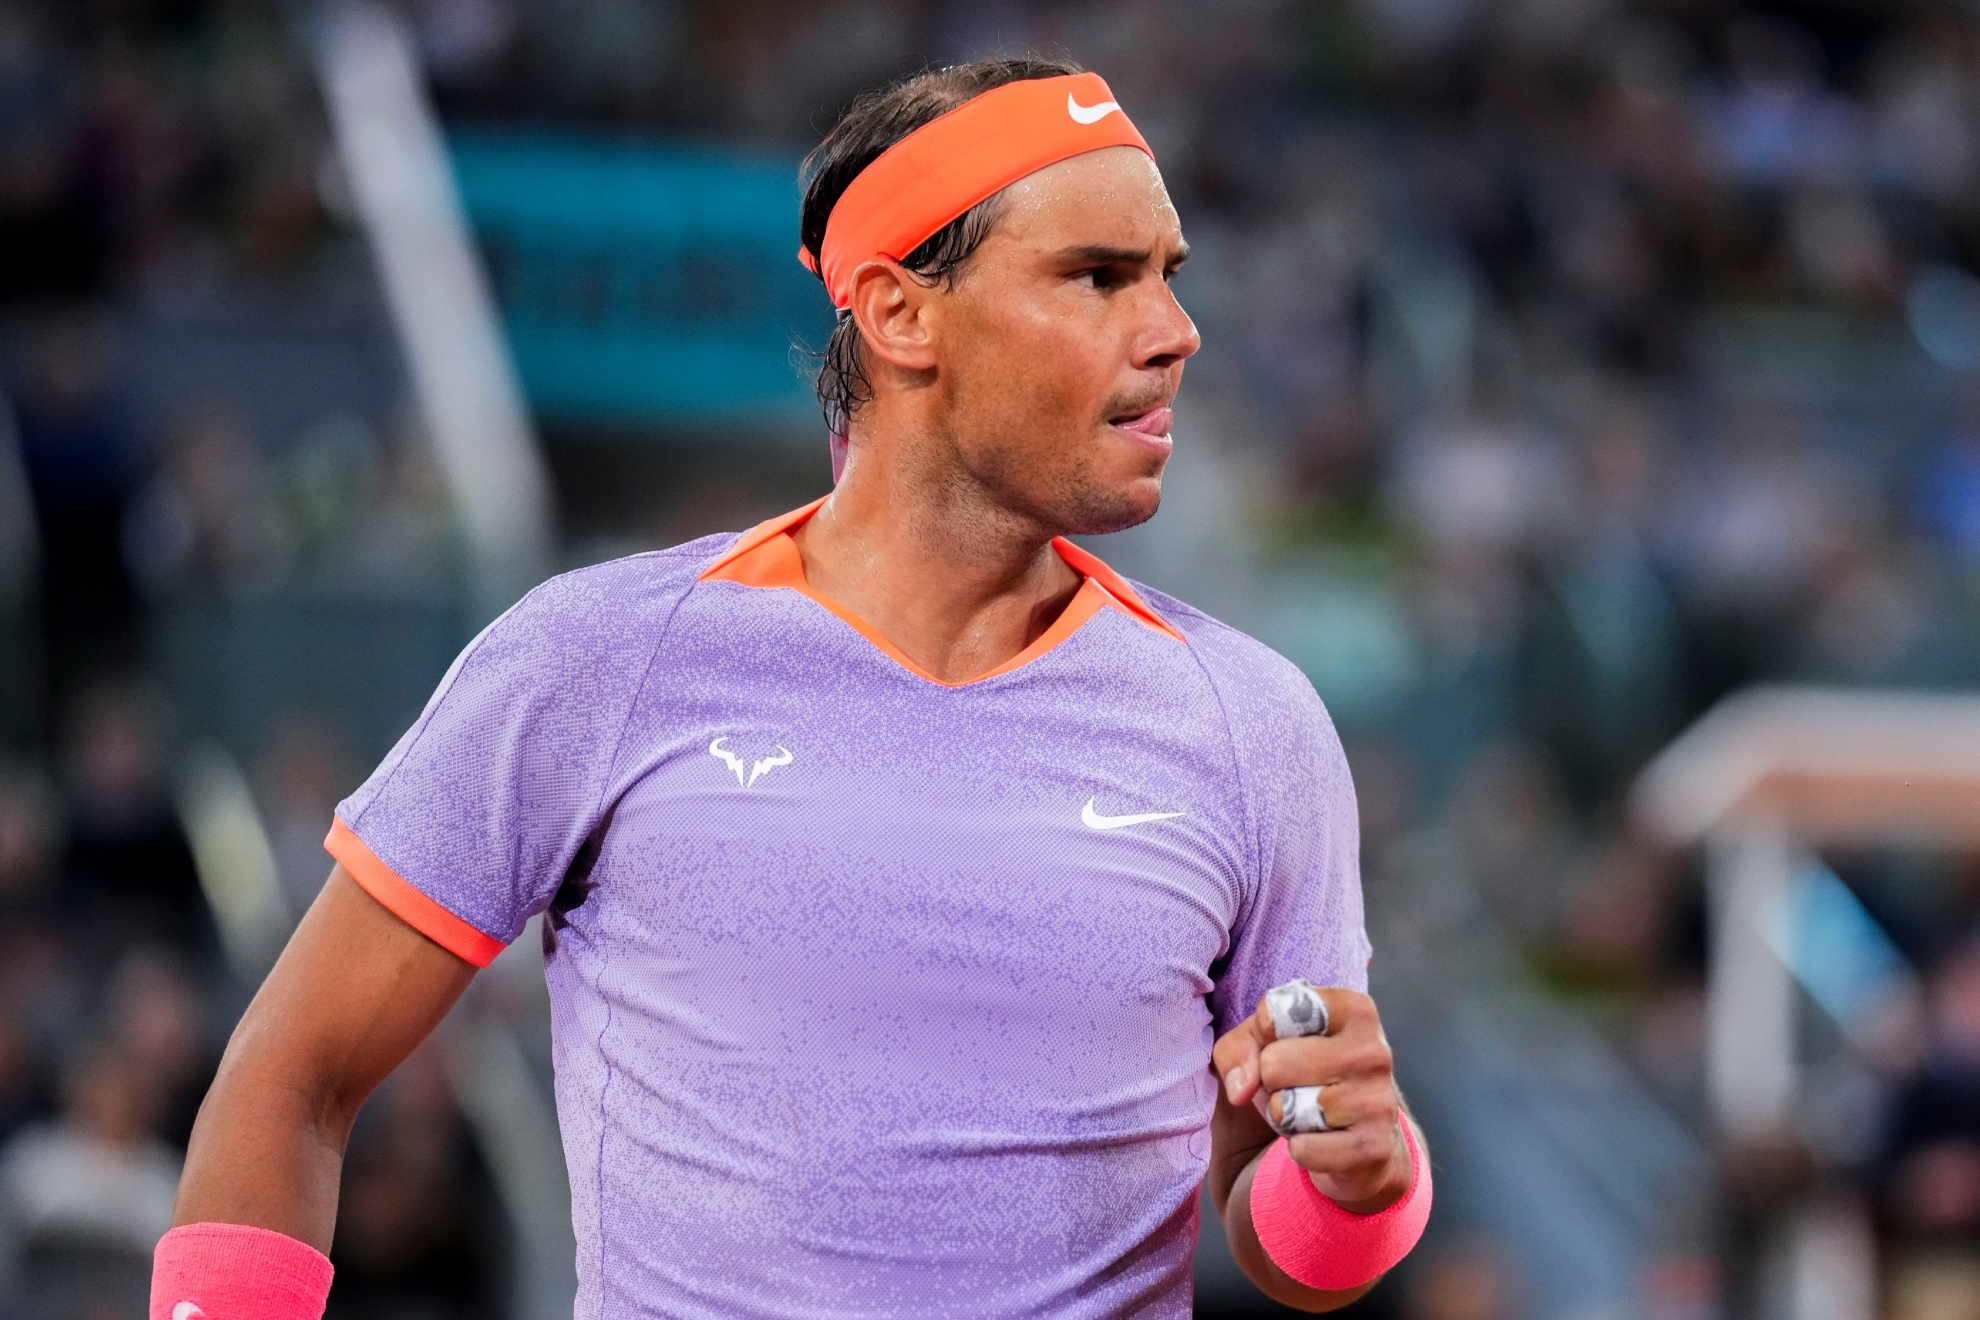 Nadal celebrates a point